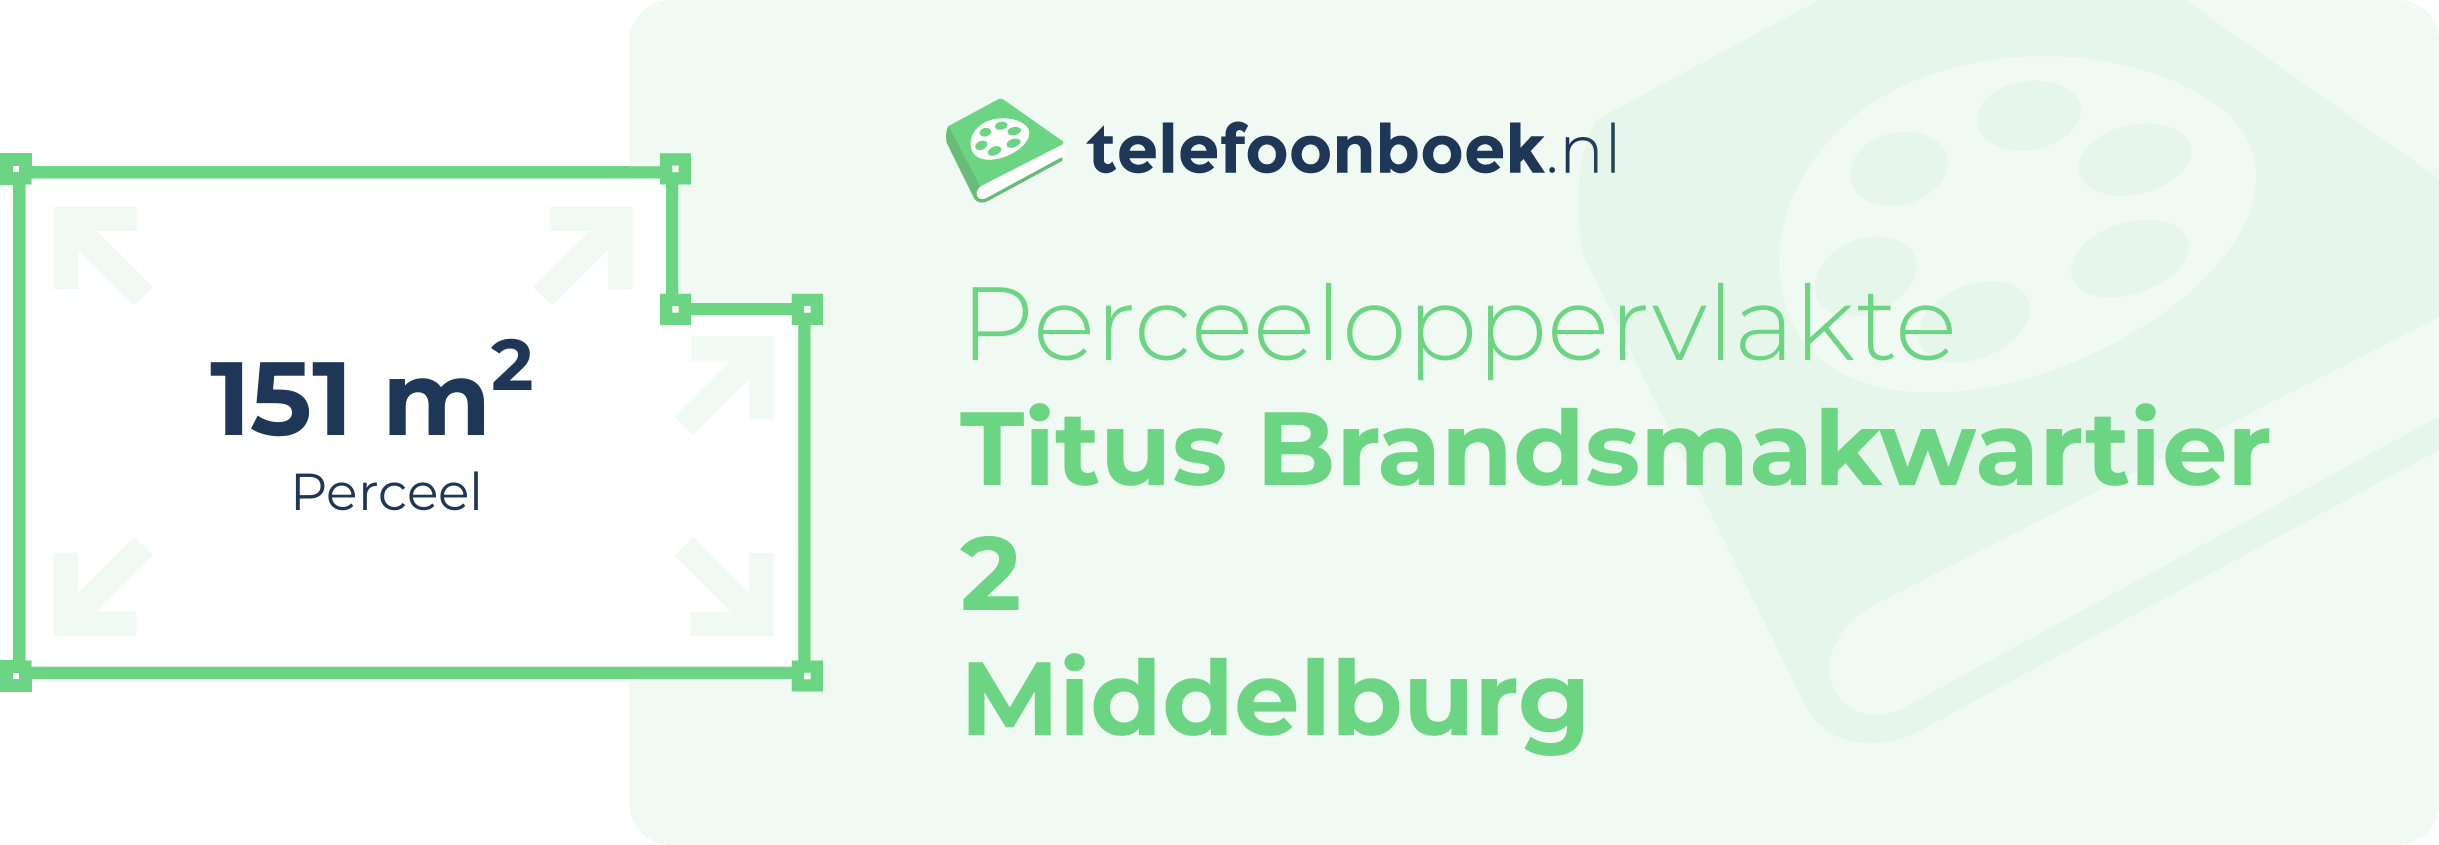 Perceeloppervlakte Titus Brandsmakwartier 2 Middelburg